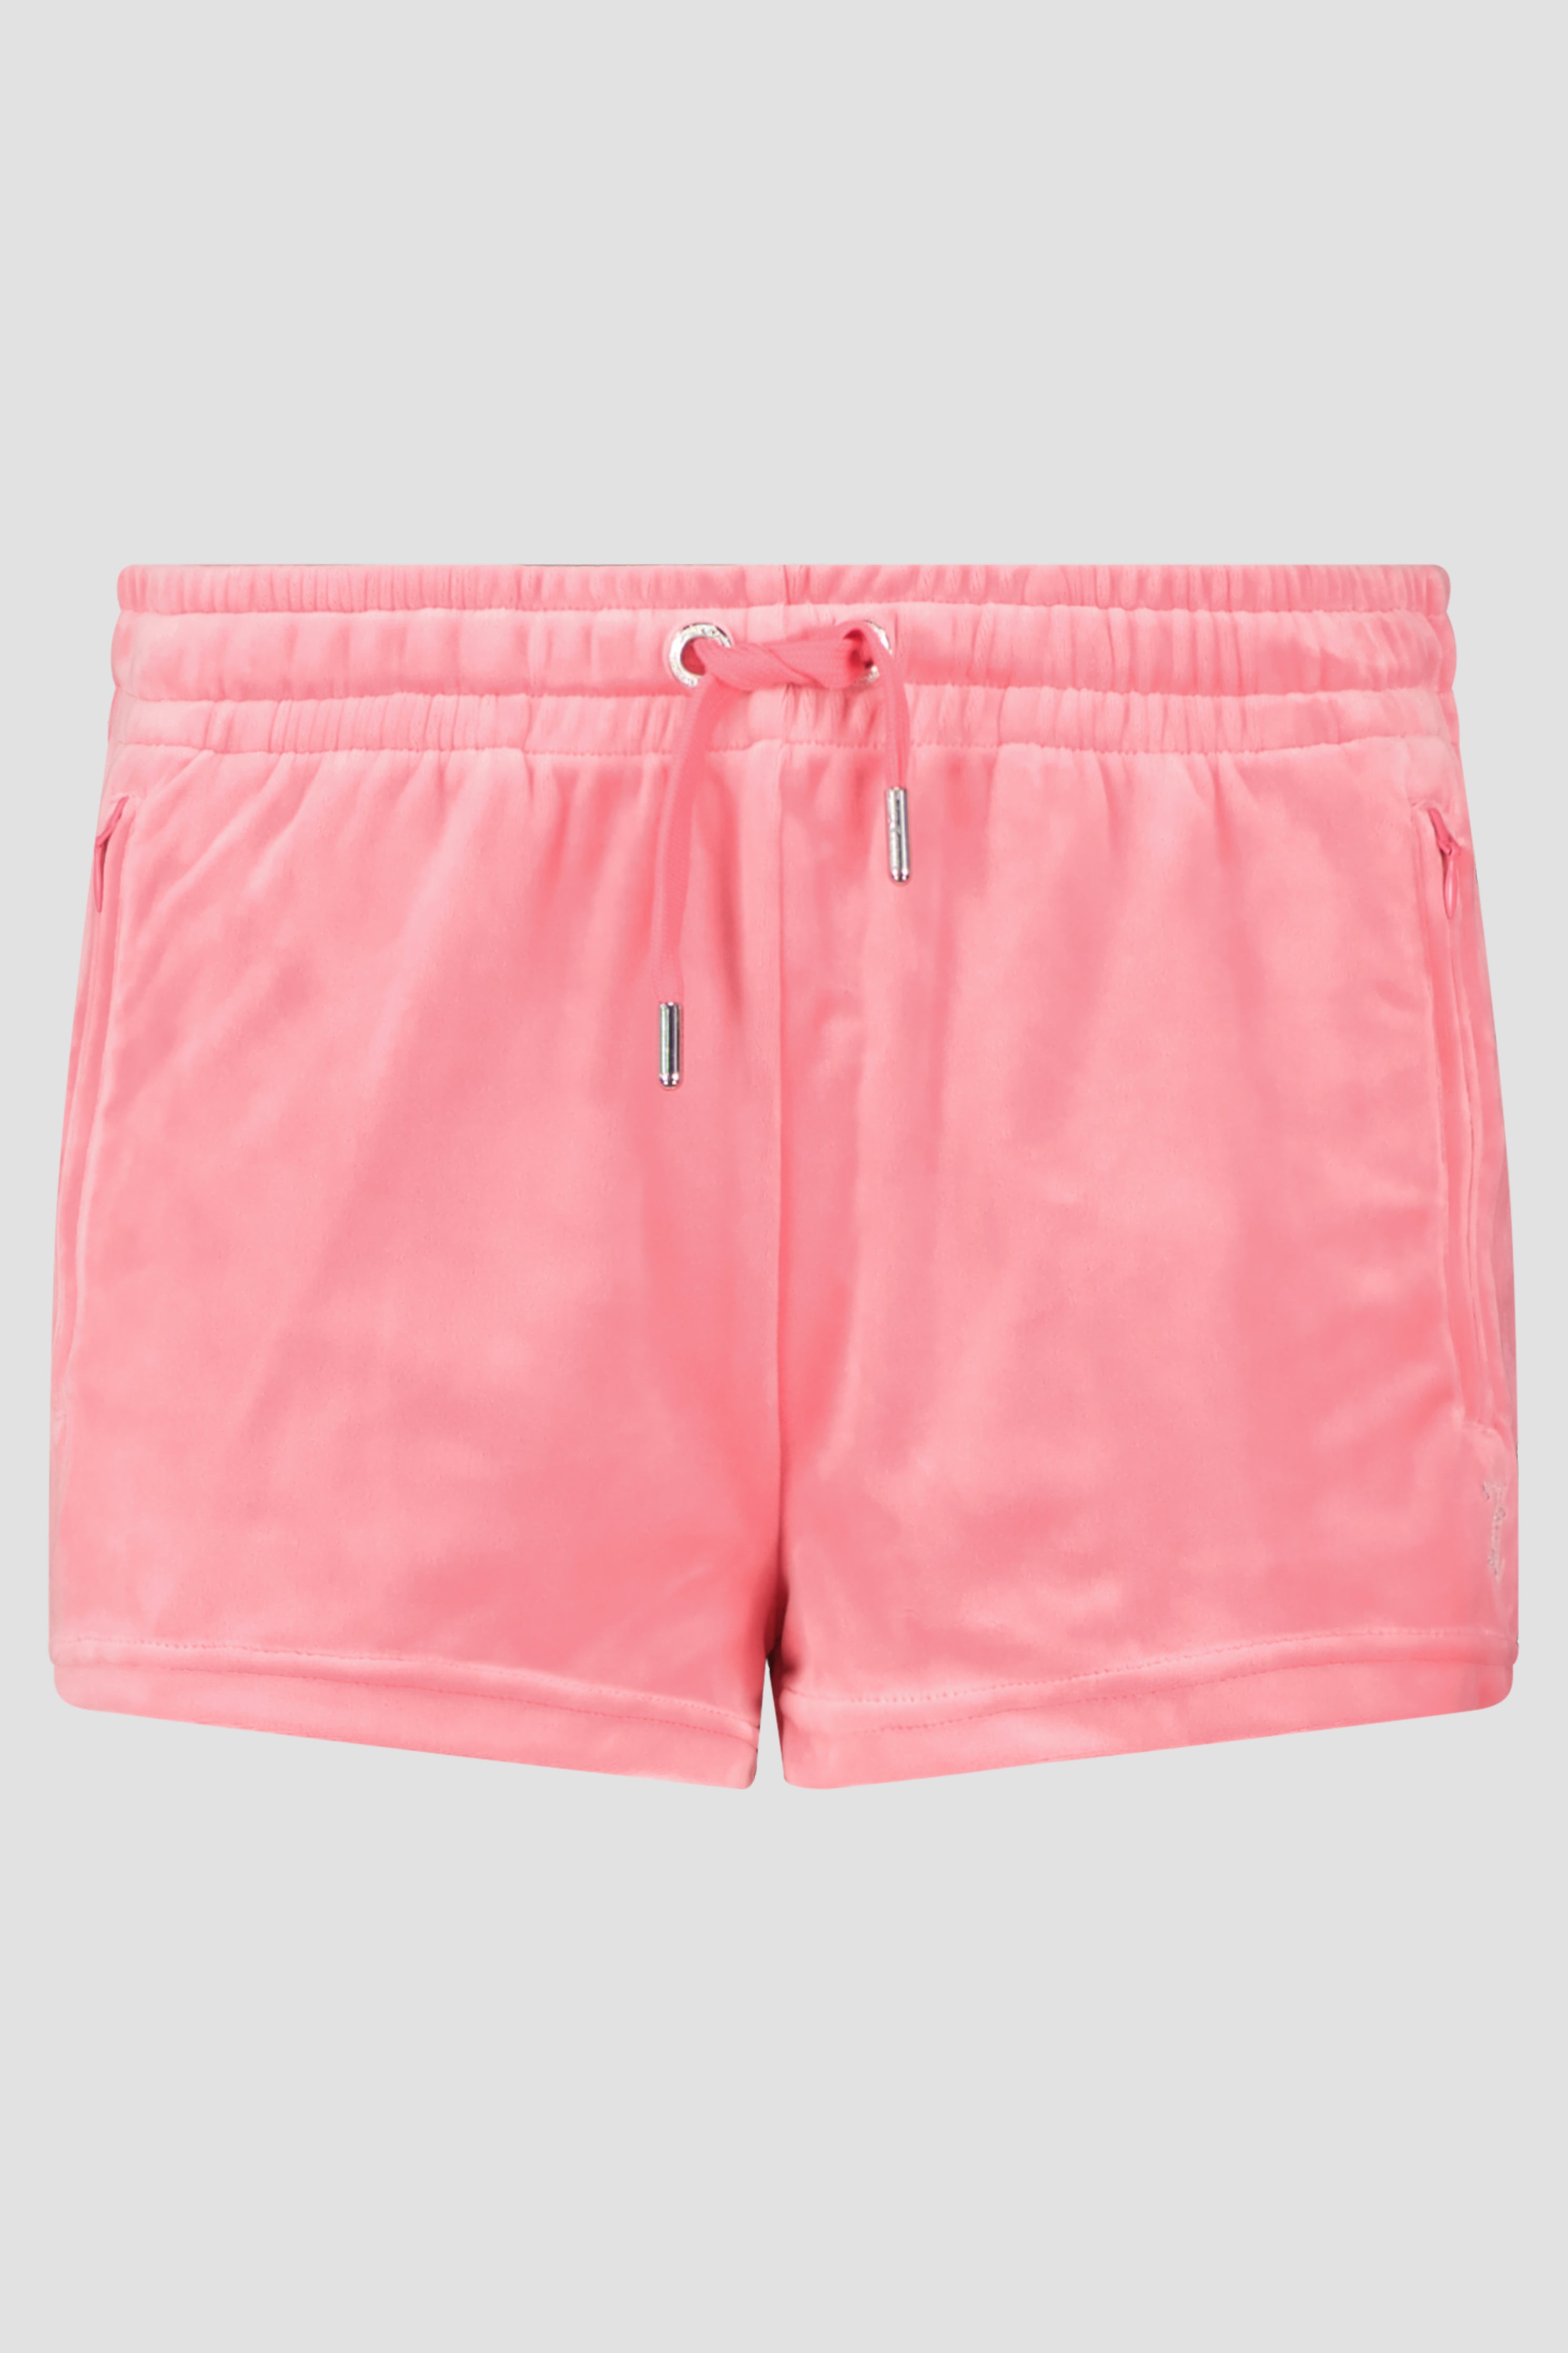 Women's Juicy Couture Pink Lemonade Tamia Shorts